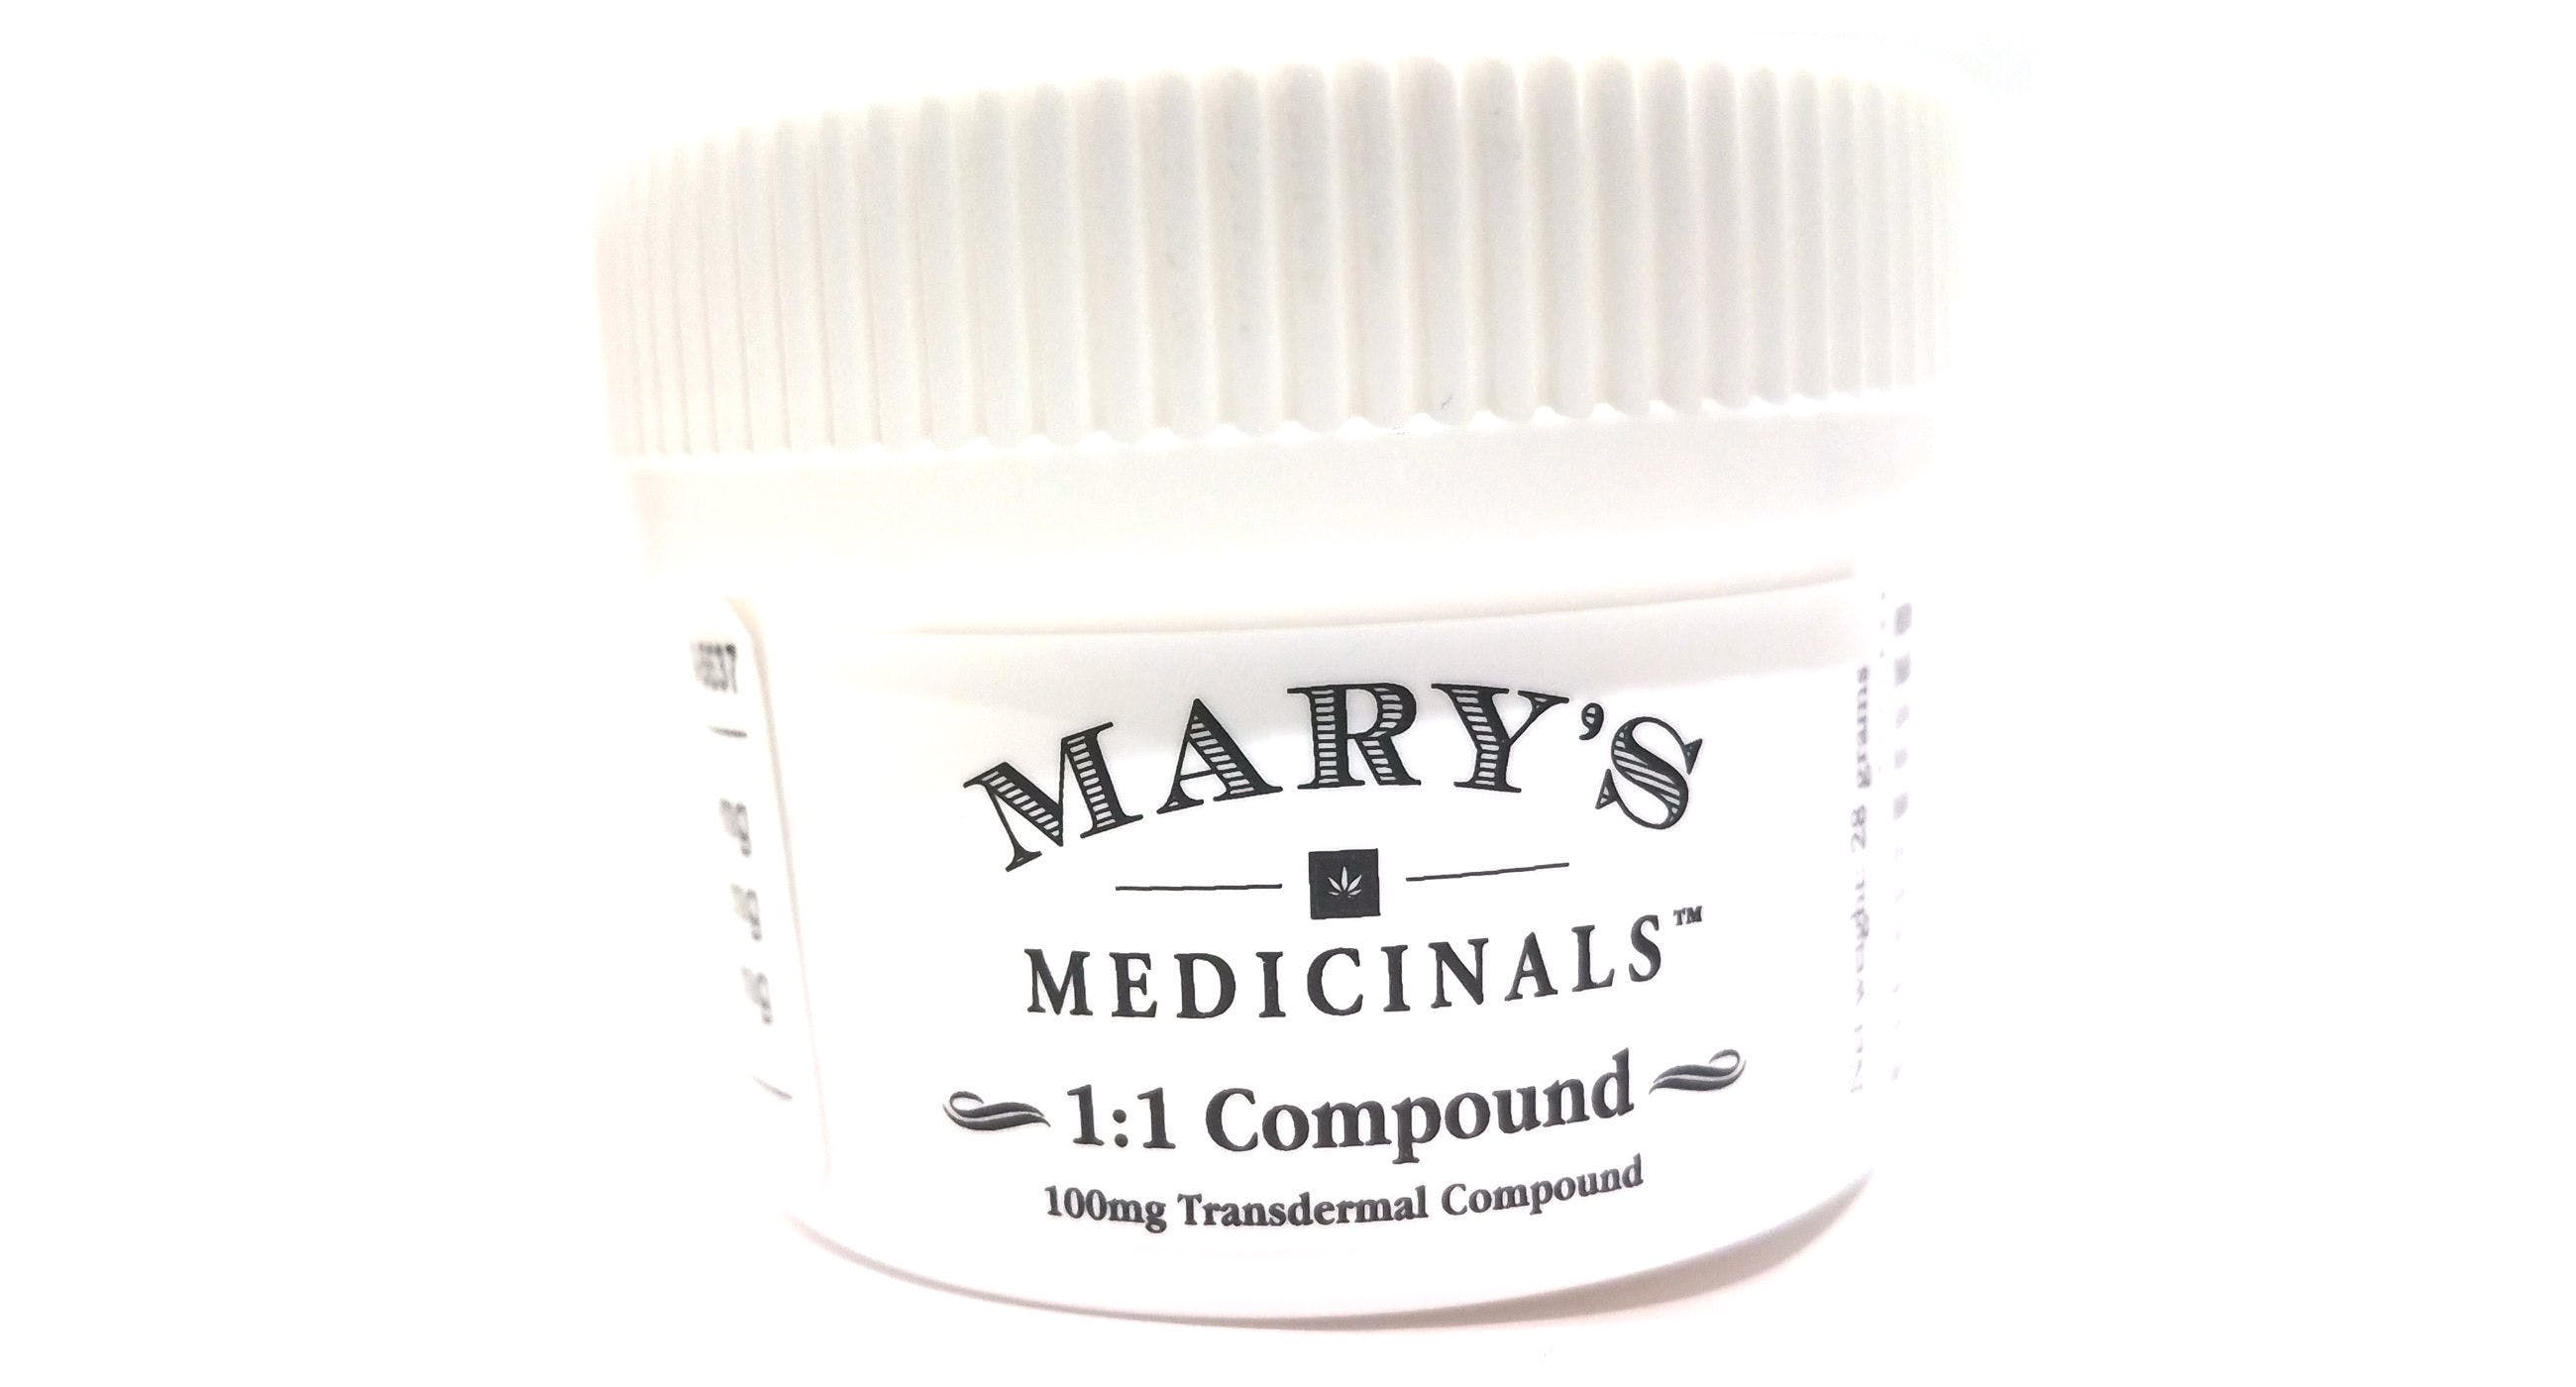 marijuana-dispensaries-8709-fingerboard-rd-frederick-marya-c2-80-c2-99s-medicinals-11-transdermal-topical-compound